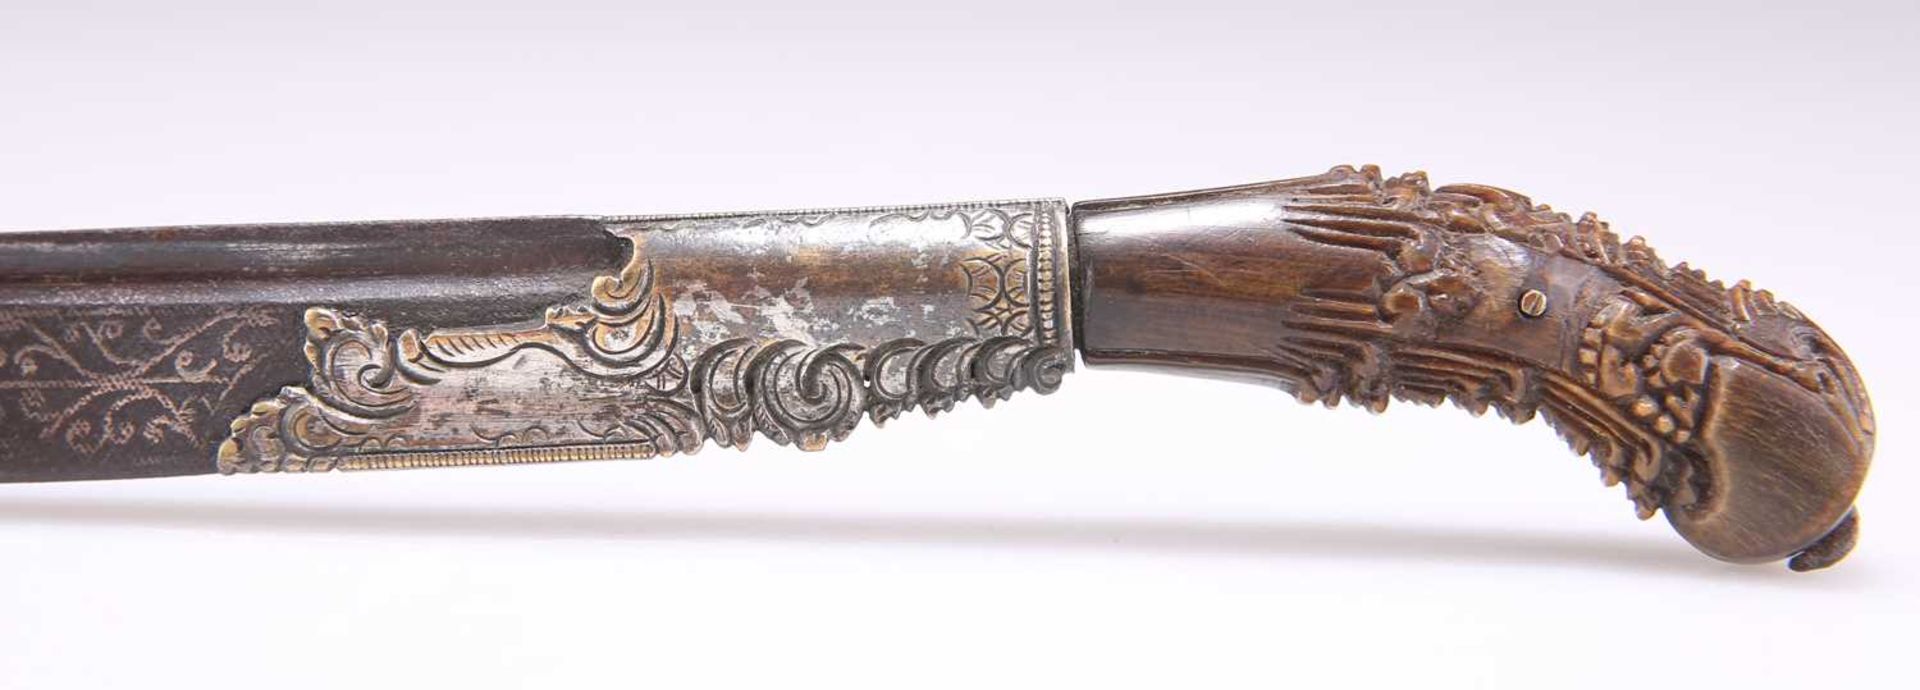 A SINGHALESE KNIFE (PIHA KAETTA), 18TH CENTURY - Image 2 of 2